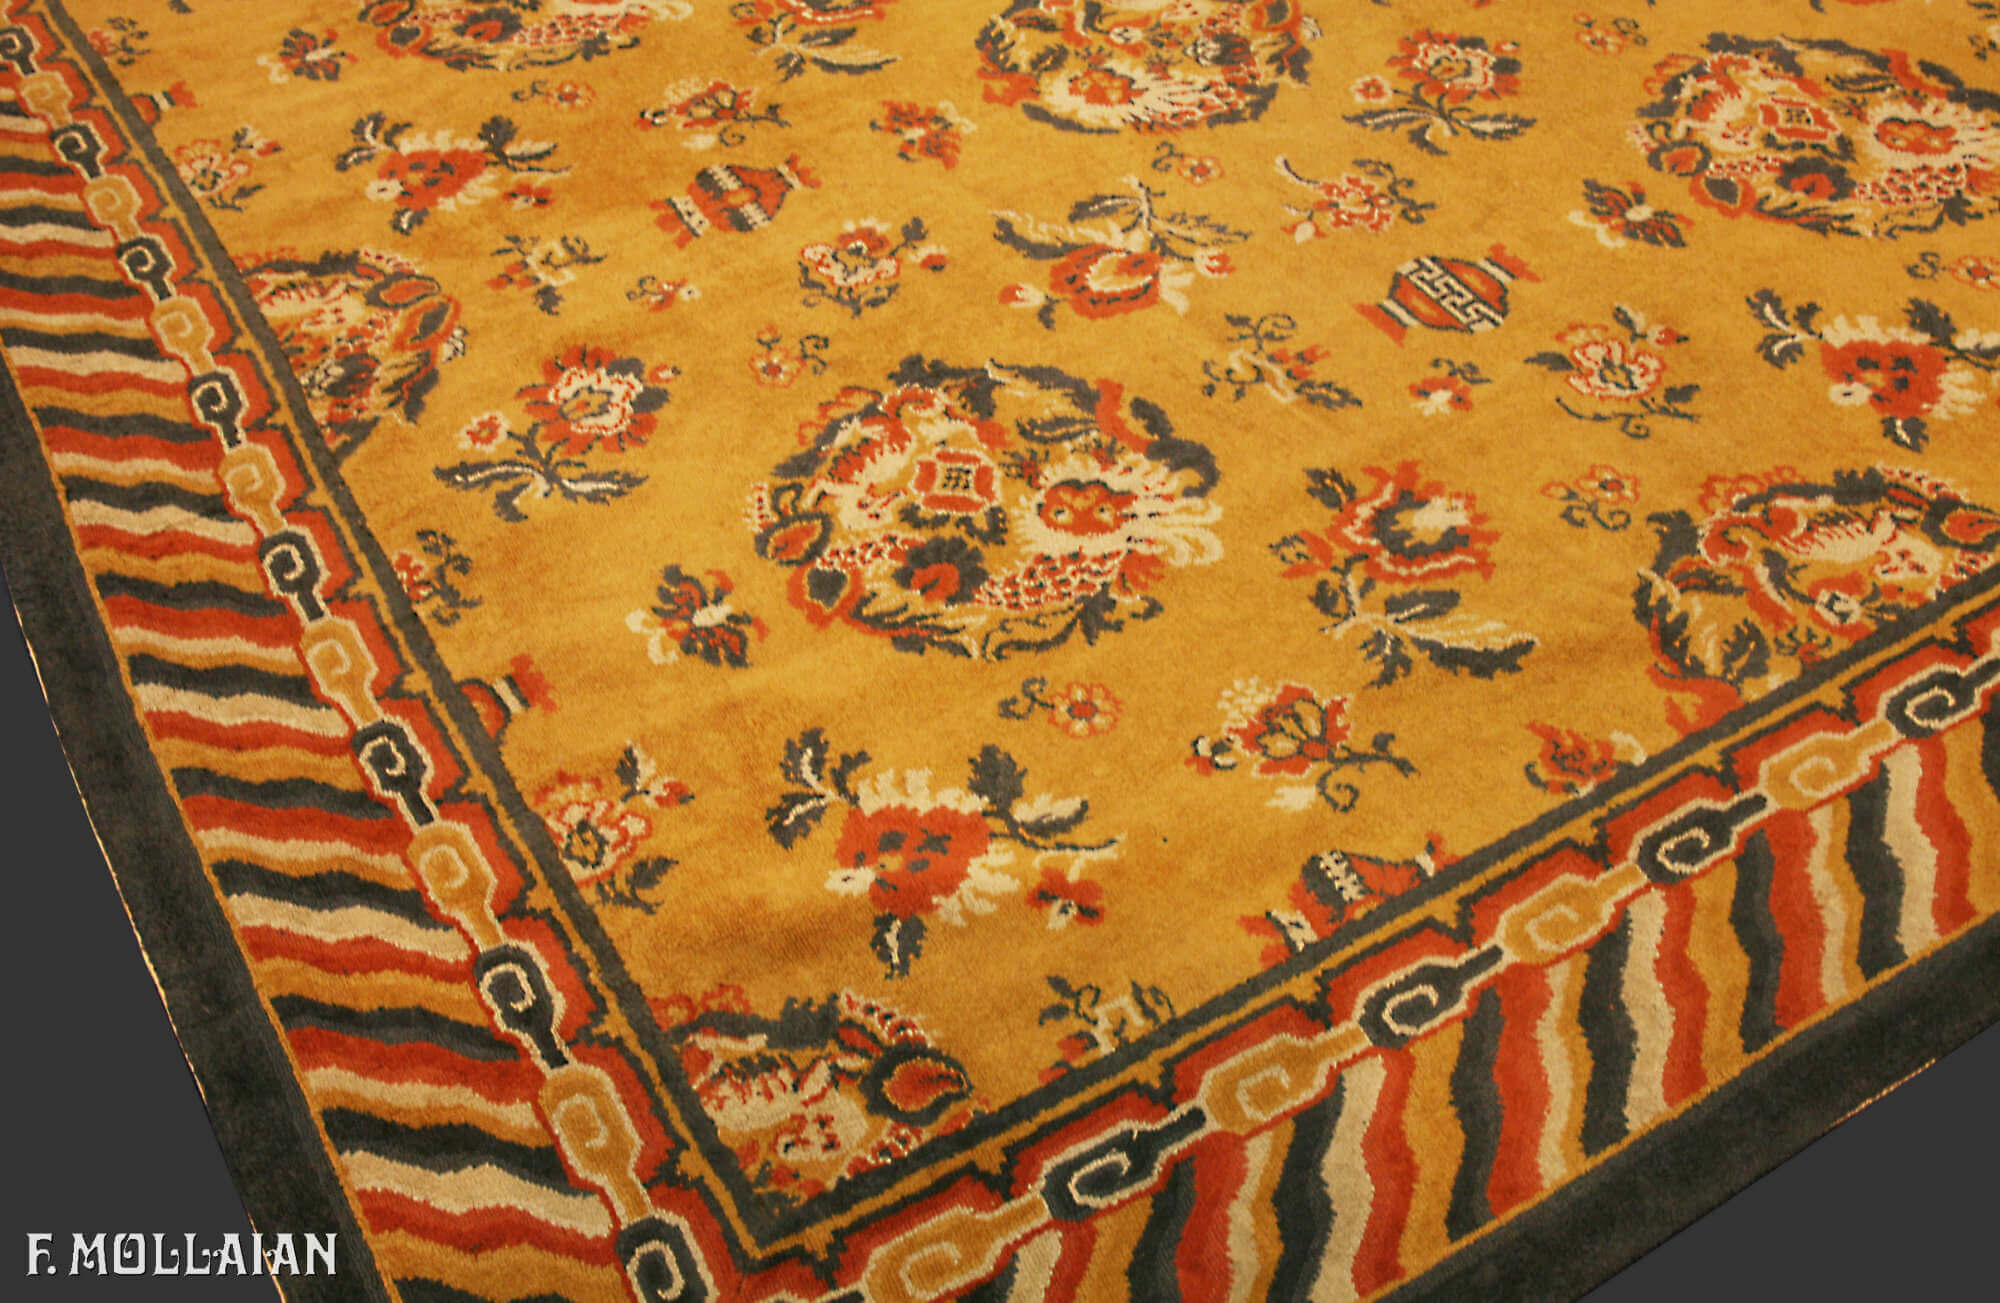 Chinês Antigo Têxtil Velvet n°:69051685